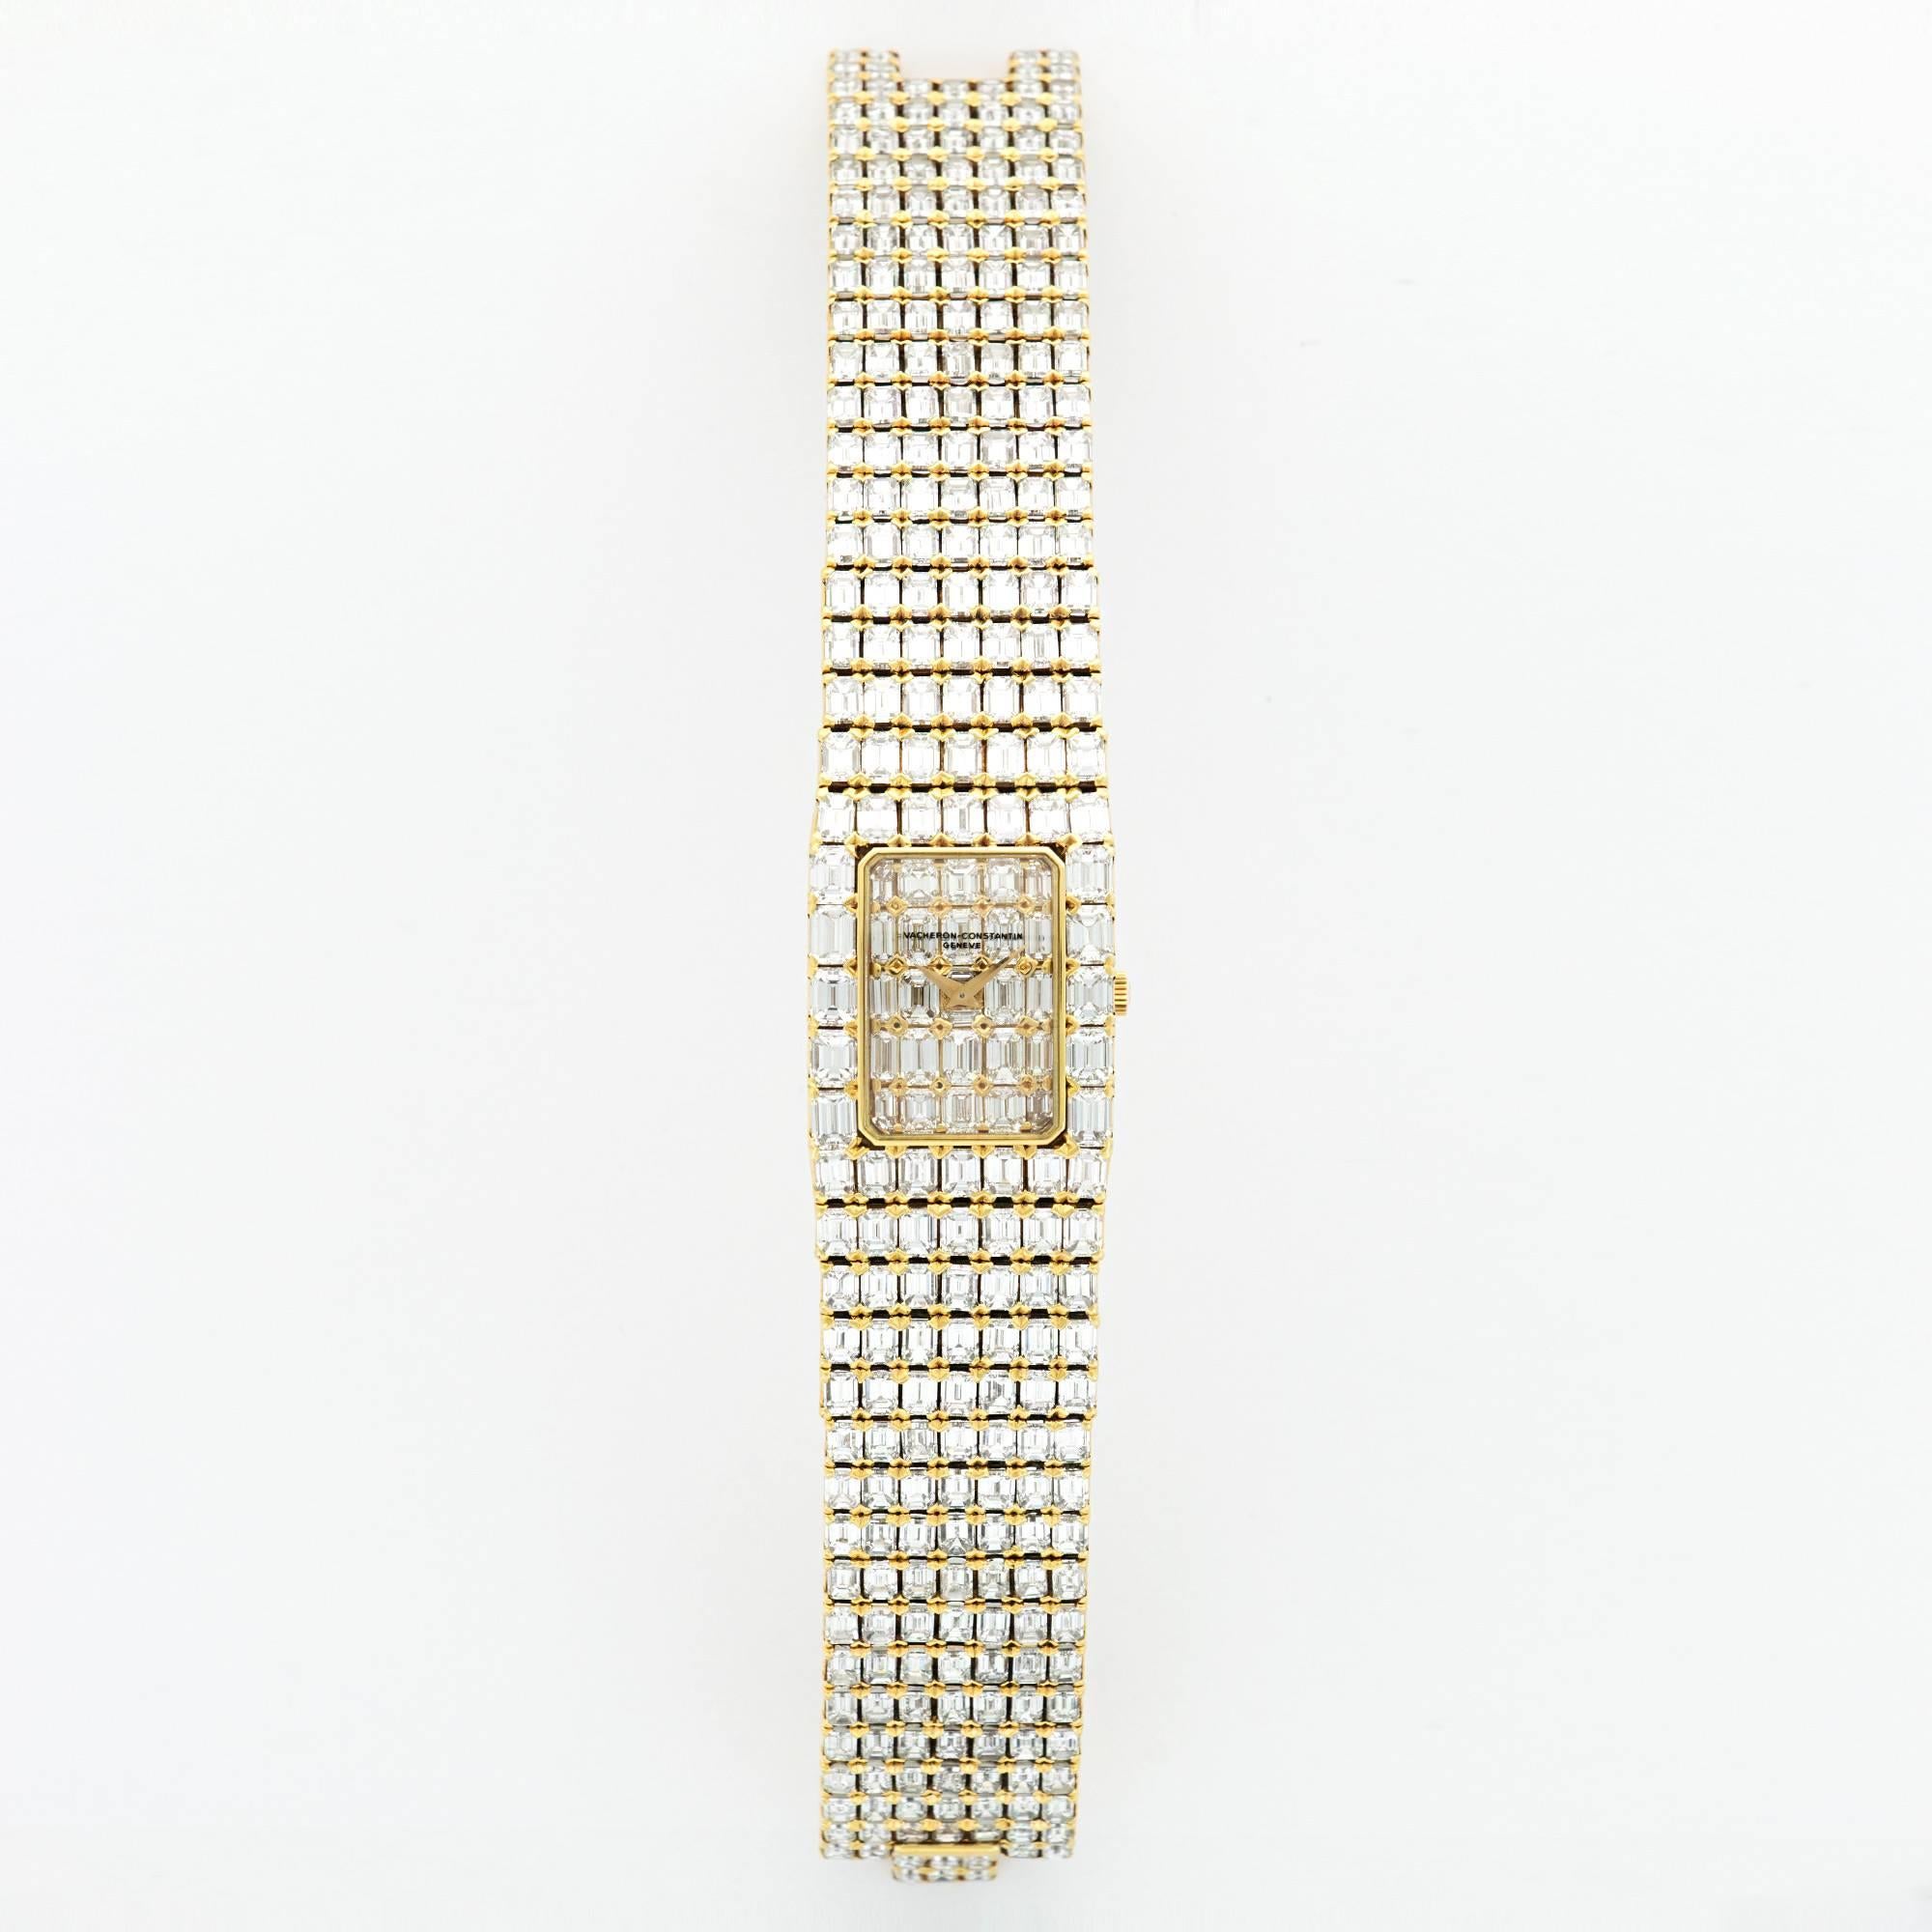 An Extraordinary Yellow Gold Full Emerald-Cut Diamond Bracelet "Lord Kalla" Wristwatch, by Vacheron Constantin. All Original Diamond Settings. Manual Wind Movement. A Truly Magnificent Timepiece.